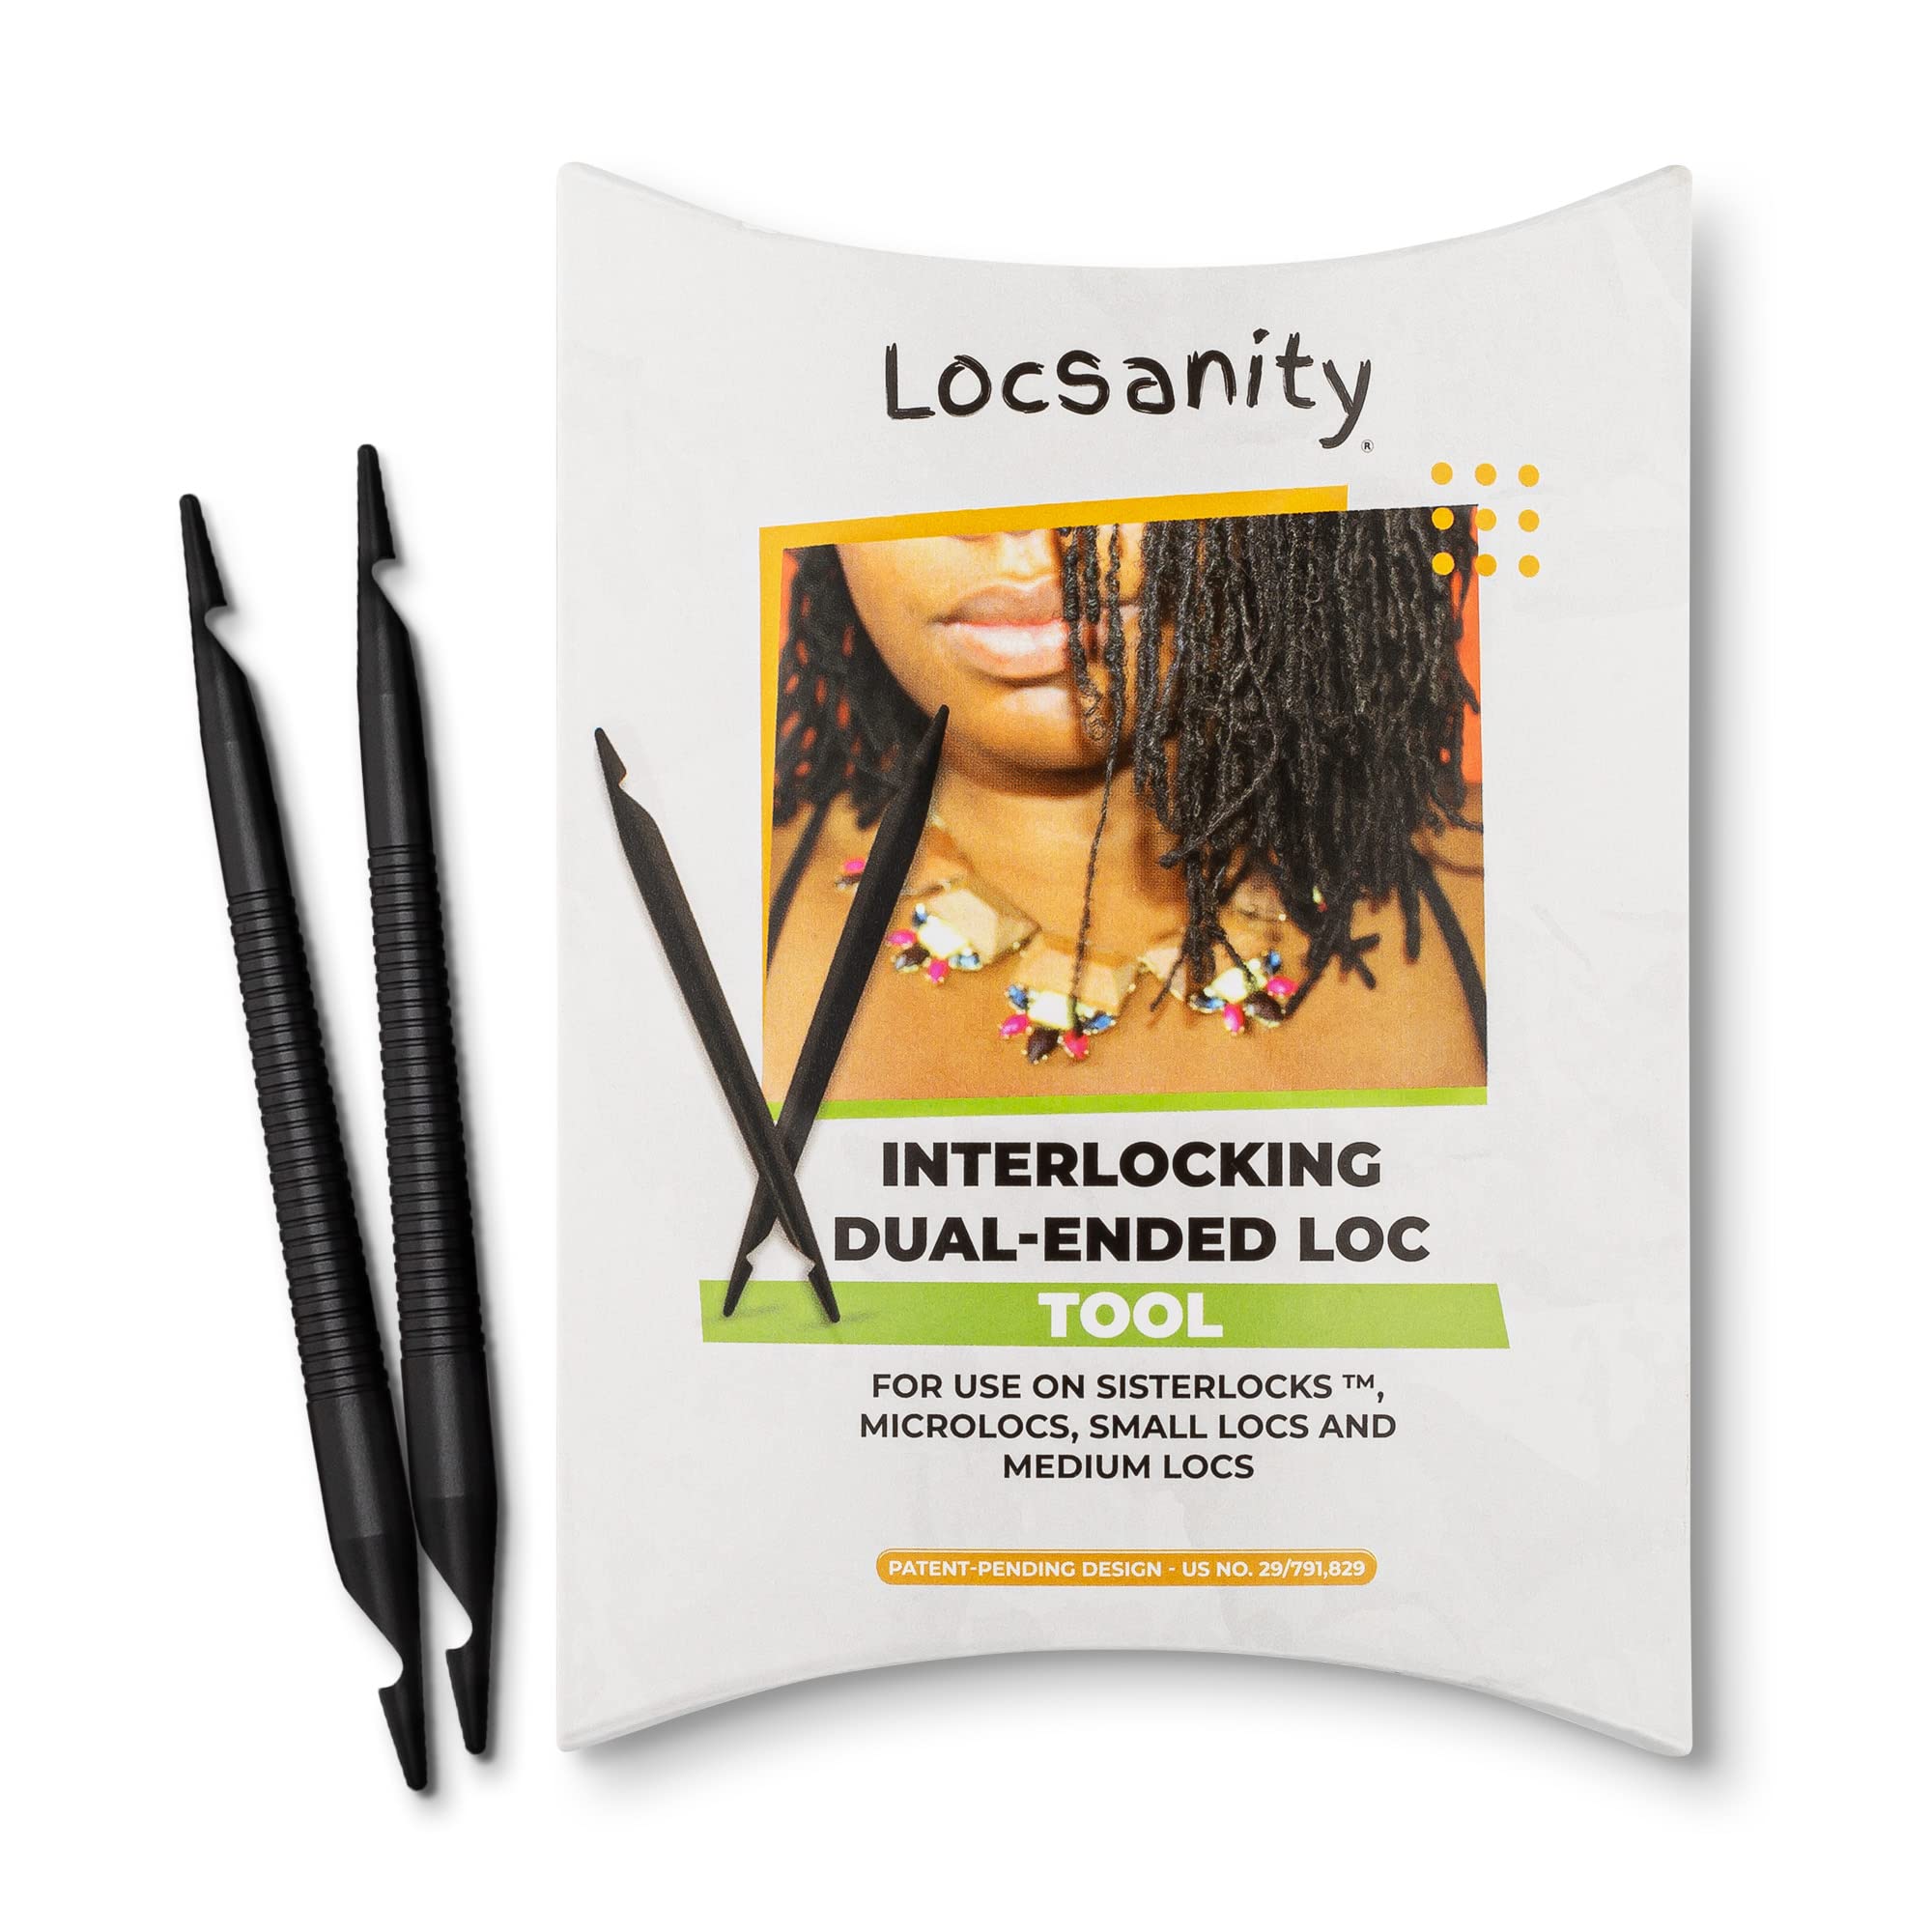 Locsanity Interlocking Tool for Locs - Dual-Ended Metal Dreadlock Crochet  Needle - Sisterlock Retightening Tool Loc Maintenance - Hair Styling Dreads  Microlocks Small/Medium Locs Double Pack